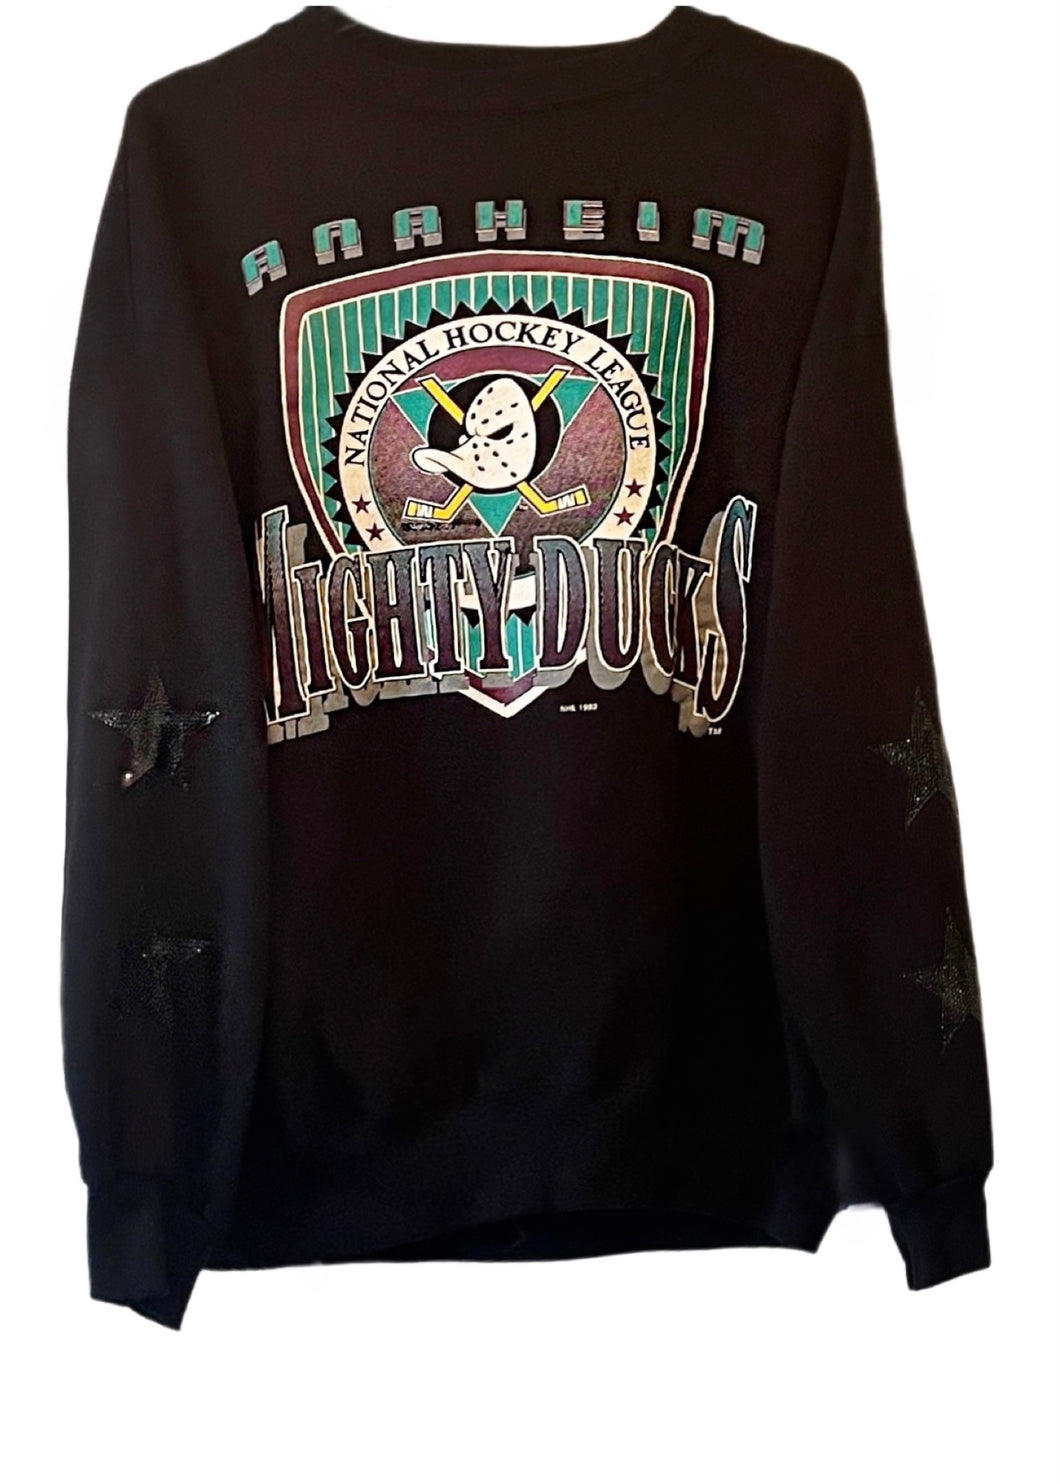 Anaheim Ducks, NHL One of a KIND “Rare” Vintage “Mighty Ducks” Sweatshirt with Black Crystal Star Design